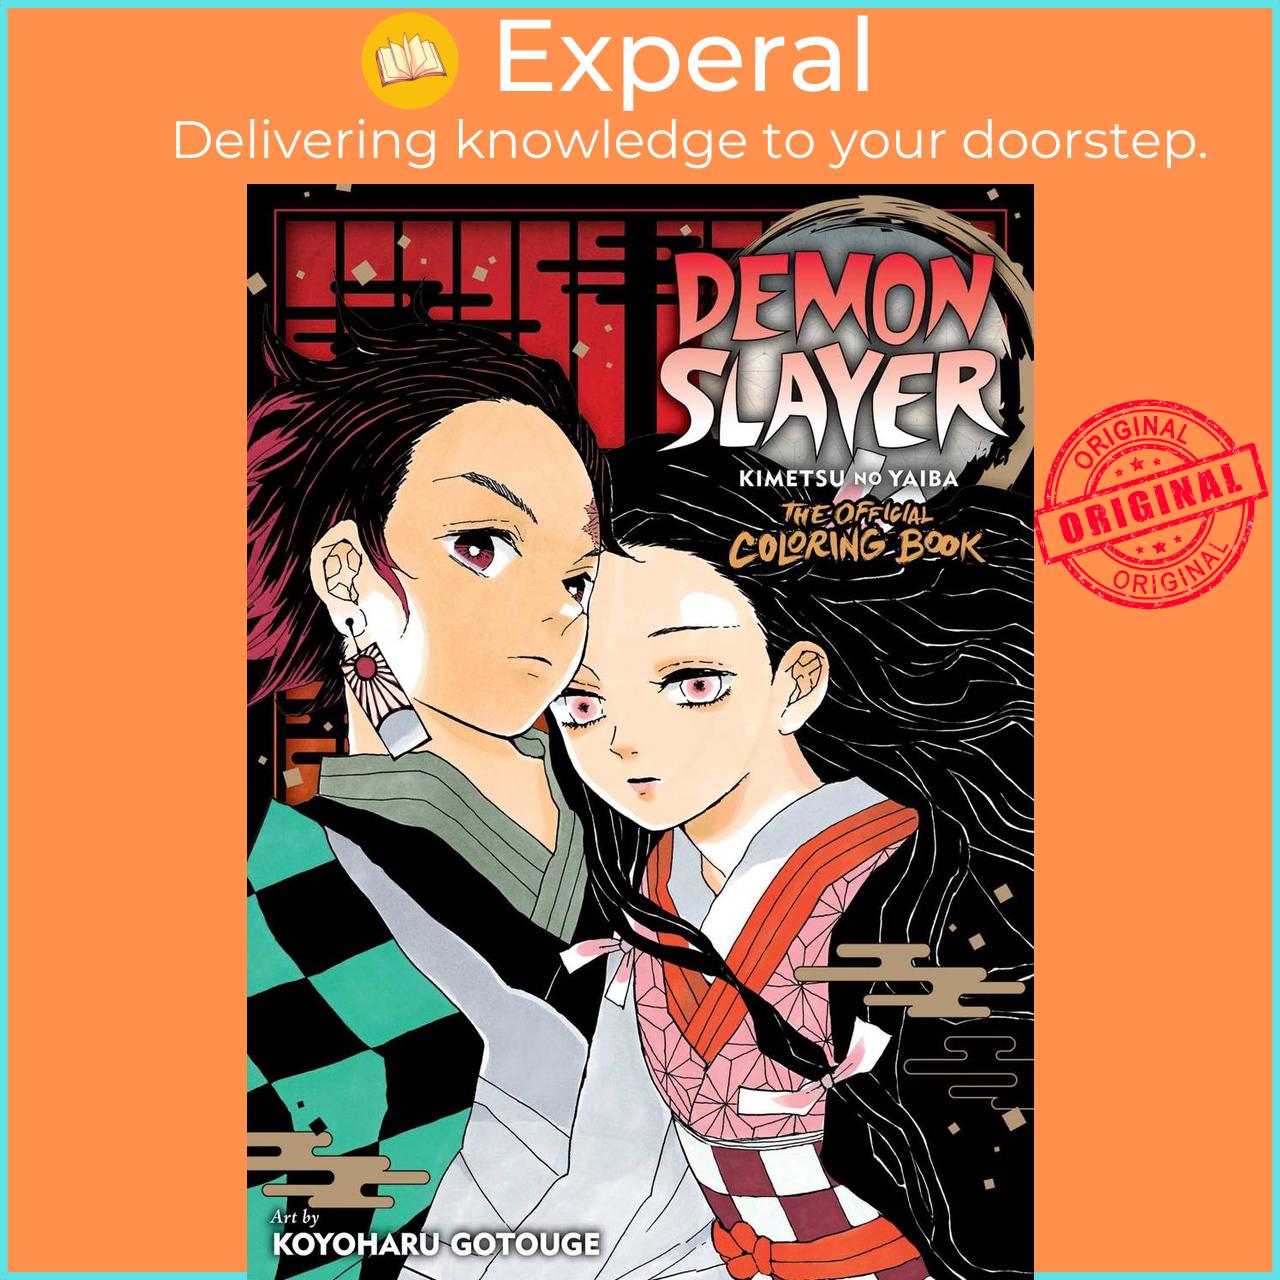 Sách - Demon Slayer: Kimetsu no Yaiba: The Official Coloring Book by Koyoharu Gotouge (UK edition, paperback)